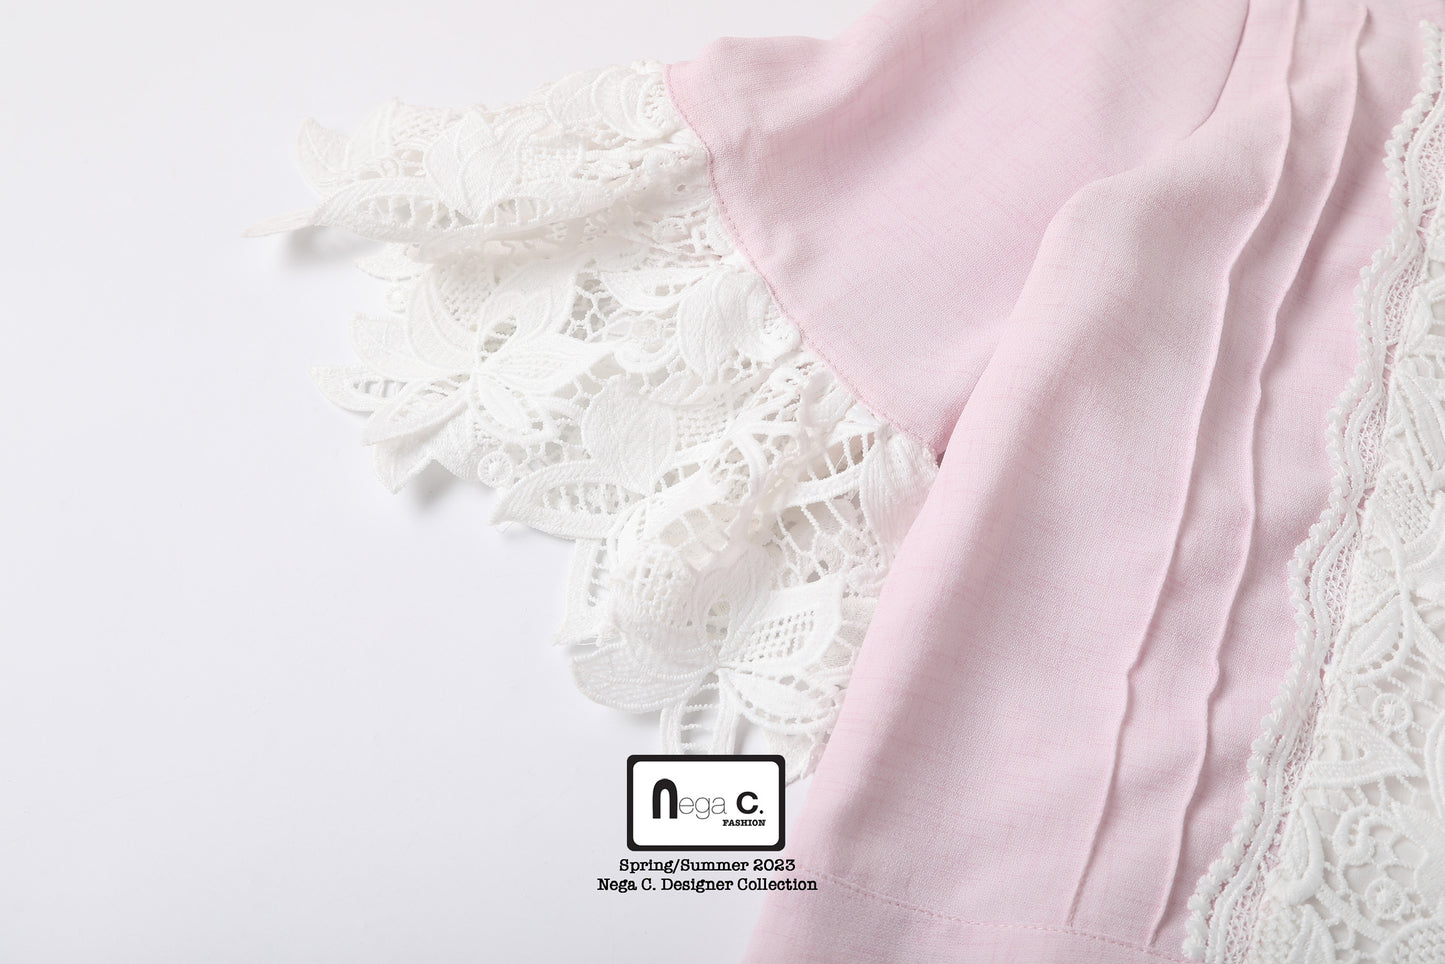 Nega C. 優雅方領蕾絲拼布喇叭袖上衣| 粉紅色| 有裡襯